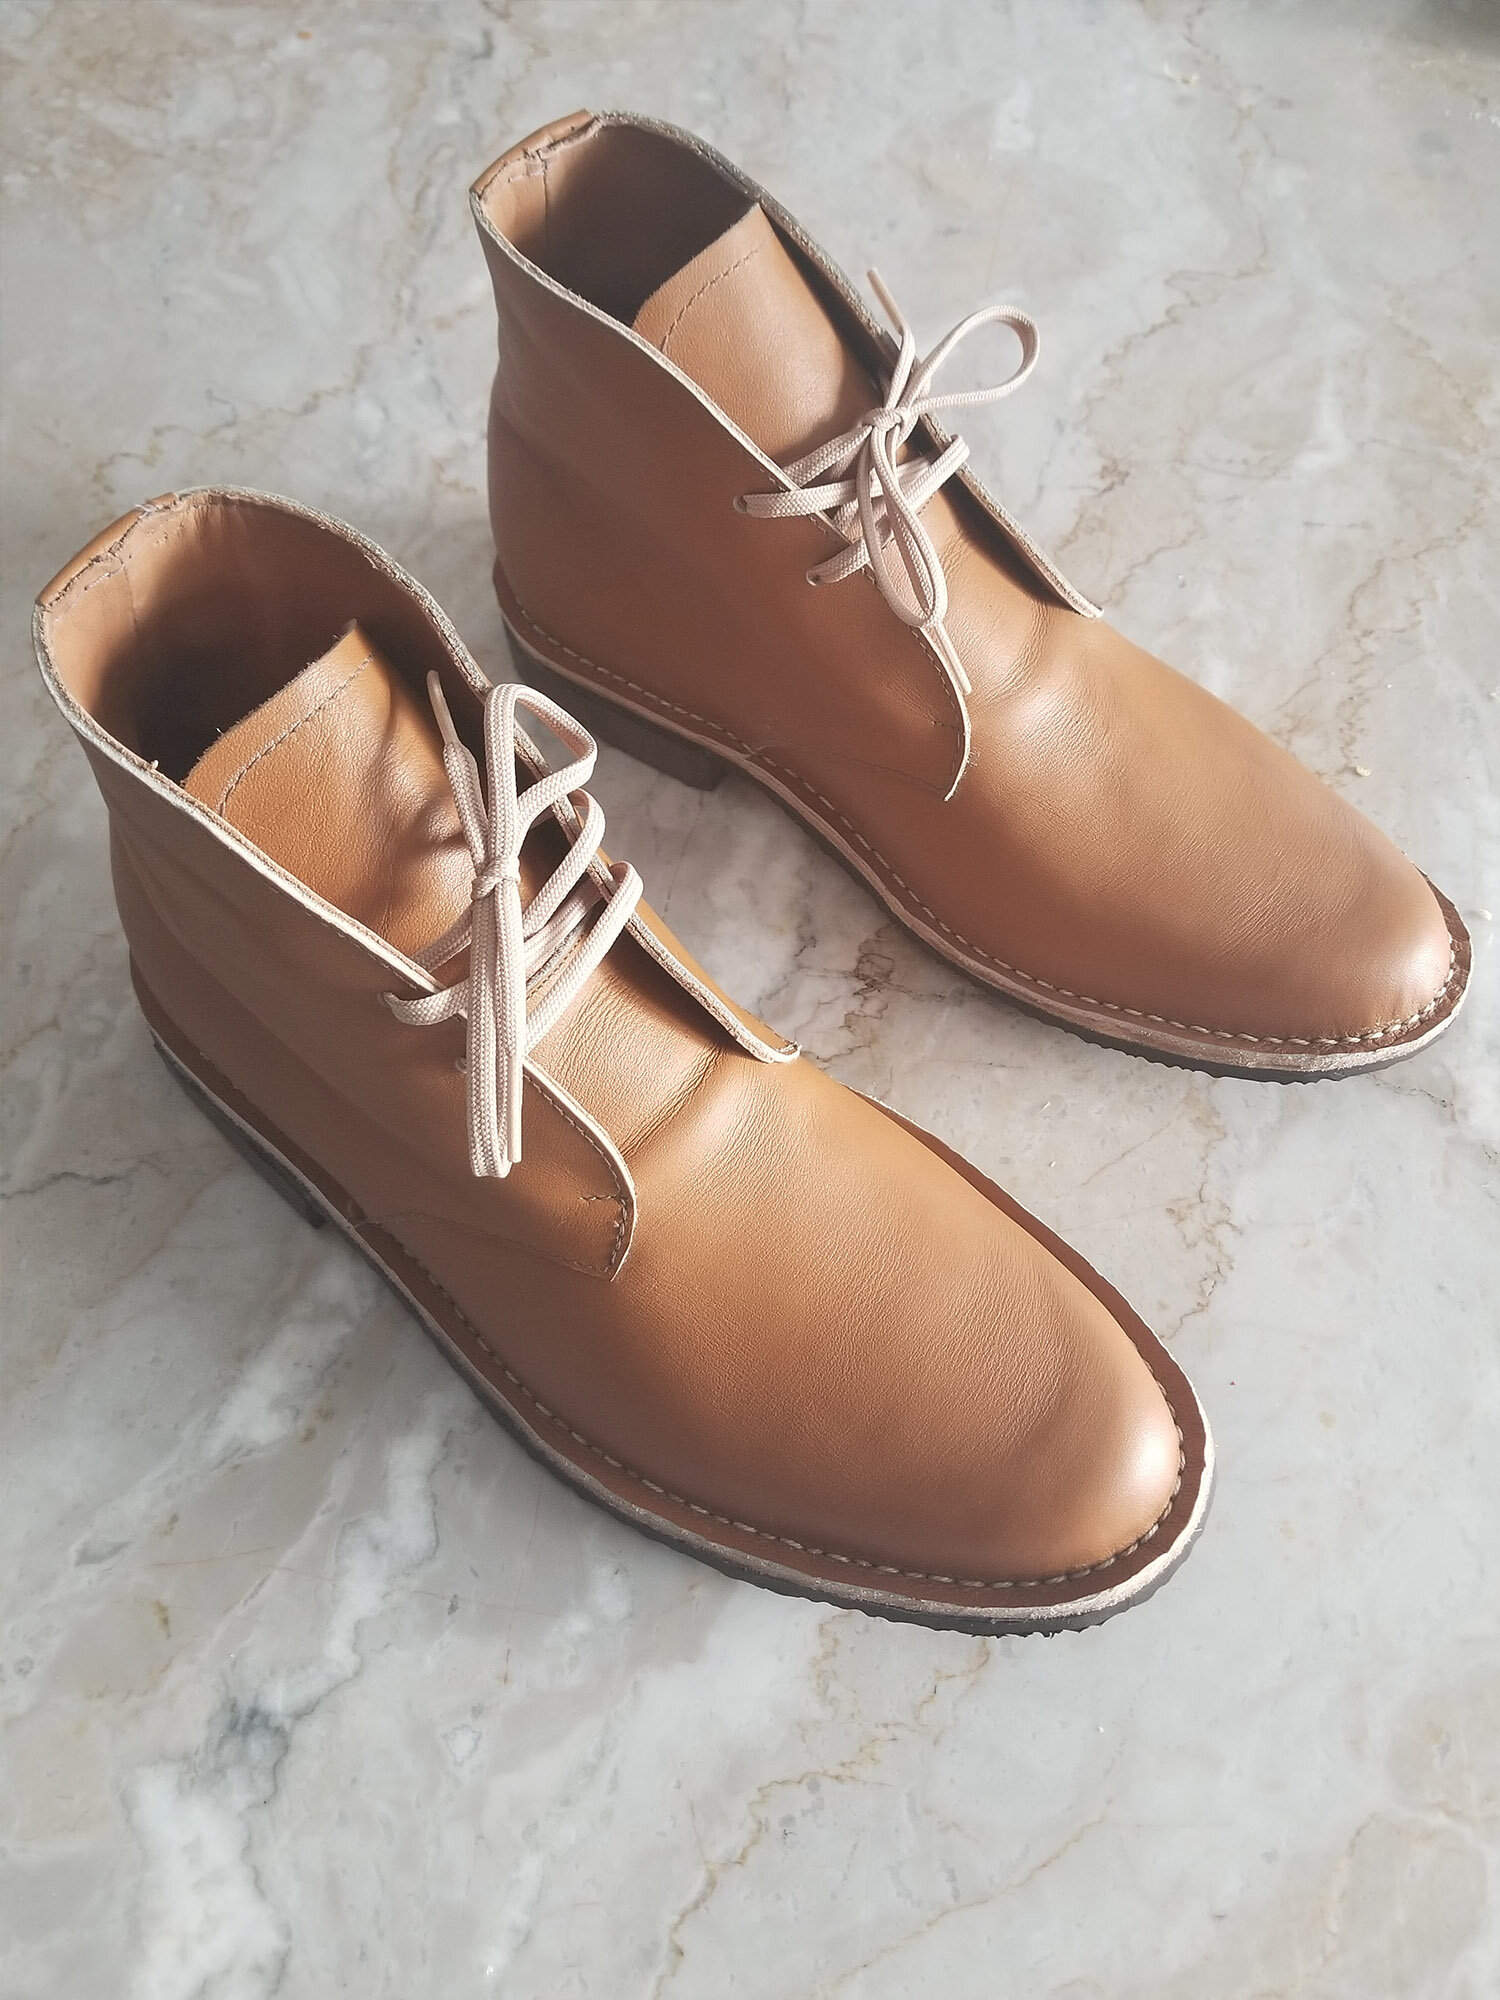 Tan leather chukka boot.